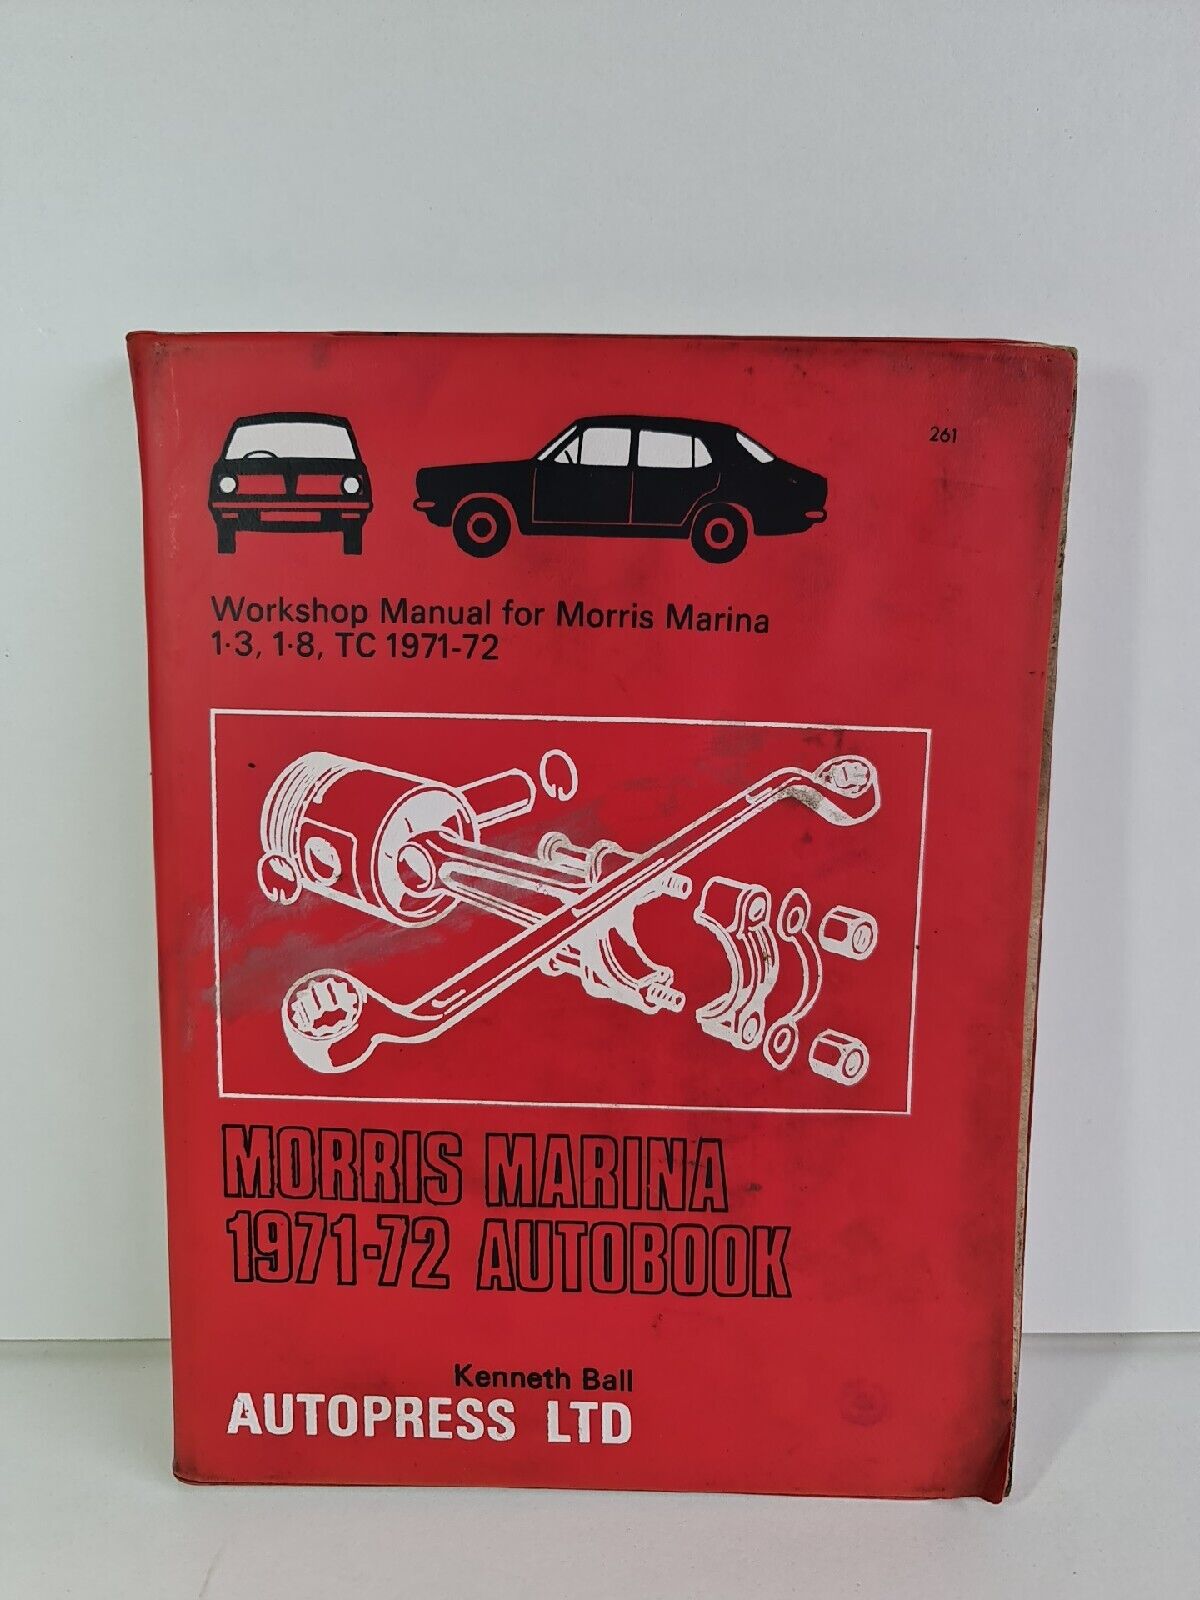 Morris Marina 1971-72 Autobook by Kenneth Ball (1972)